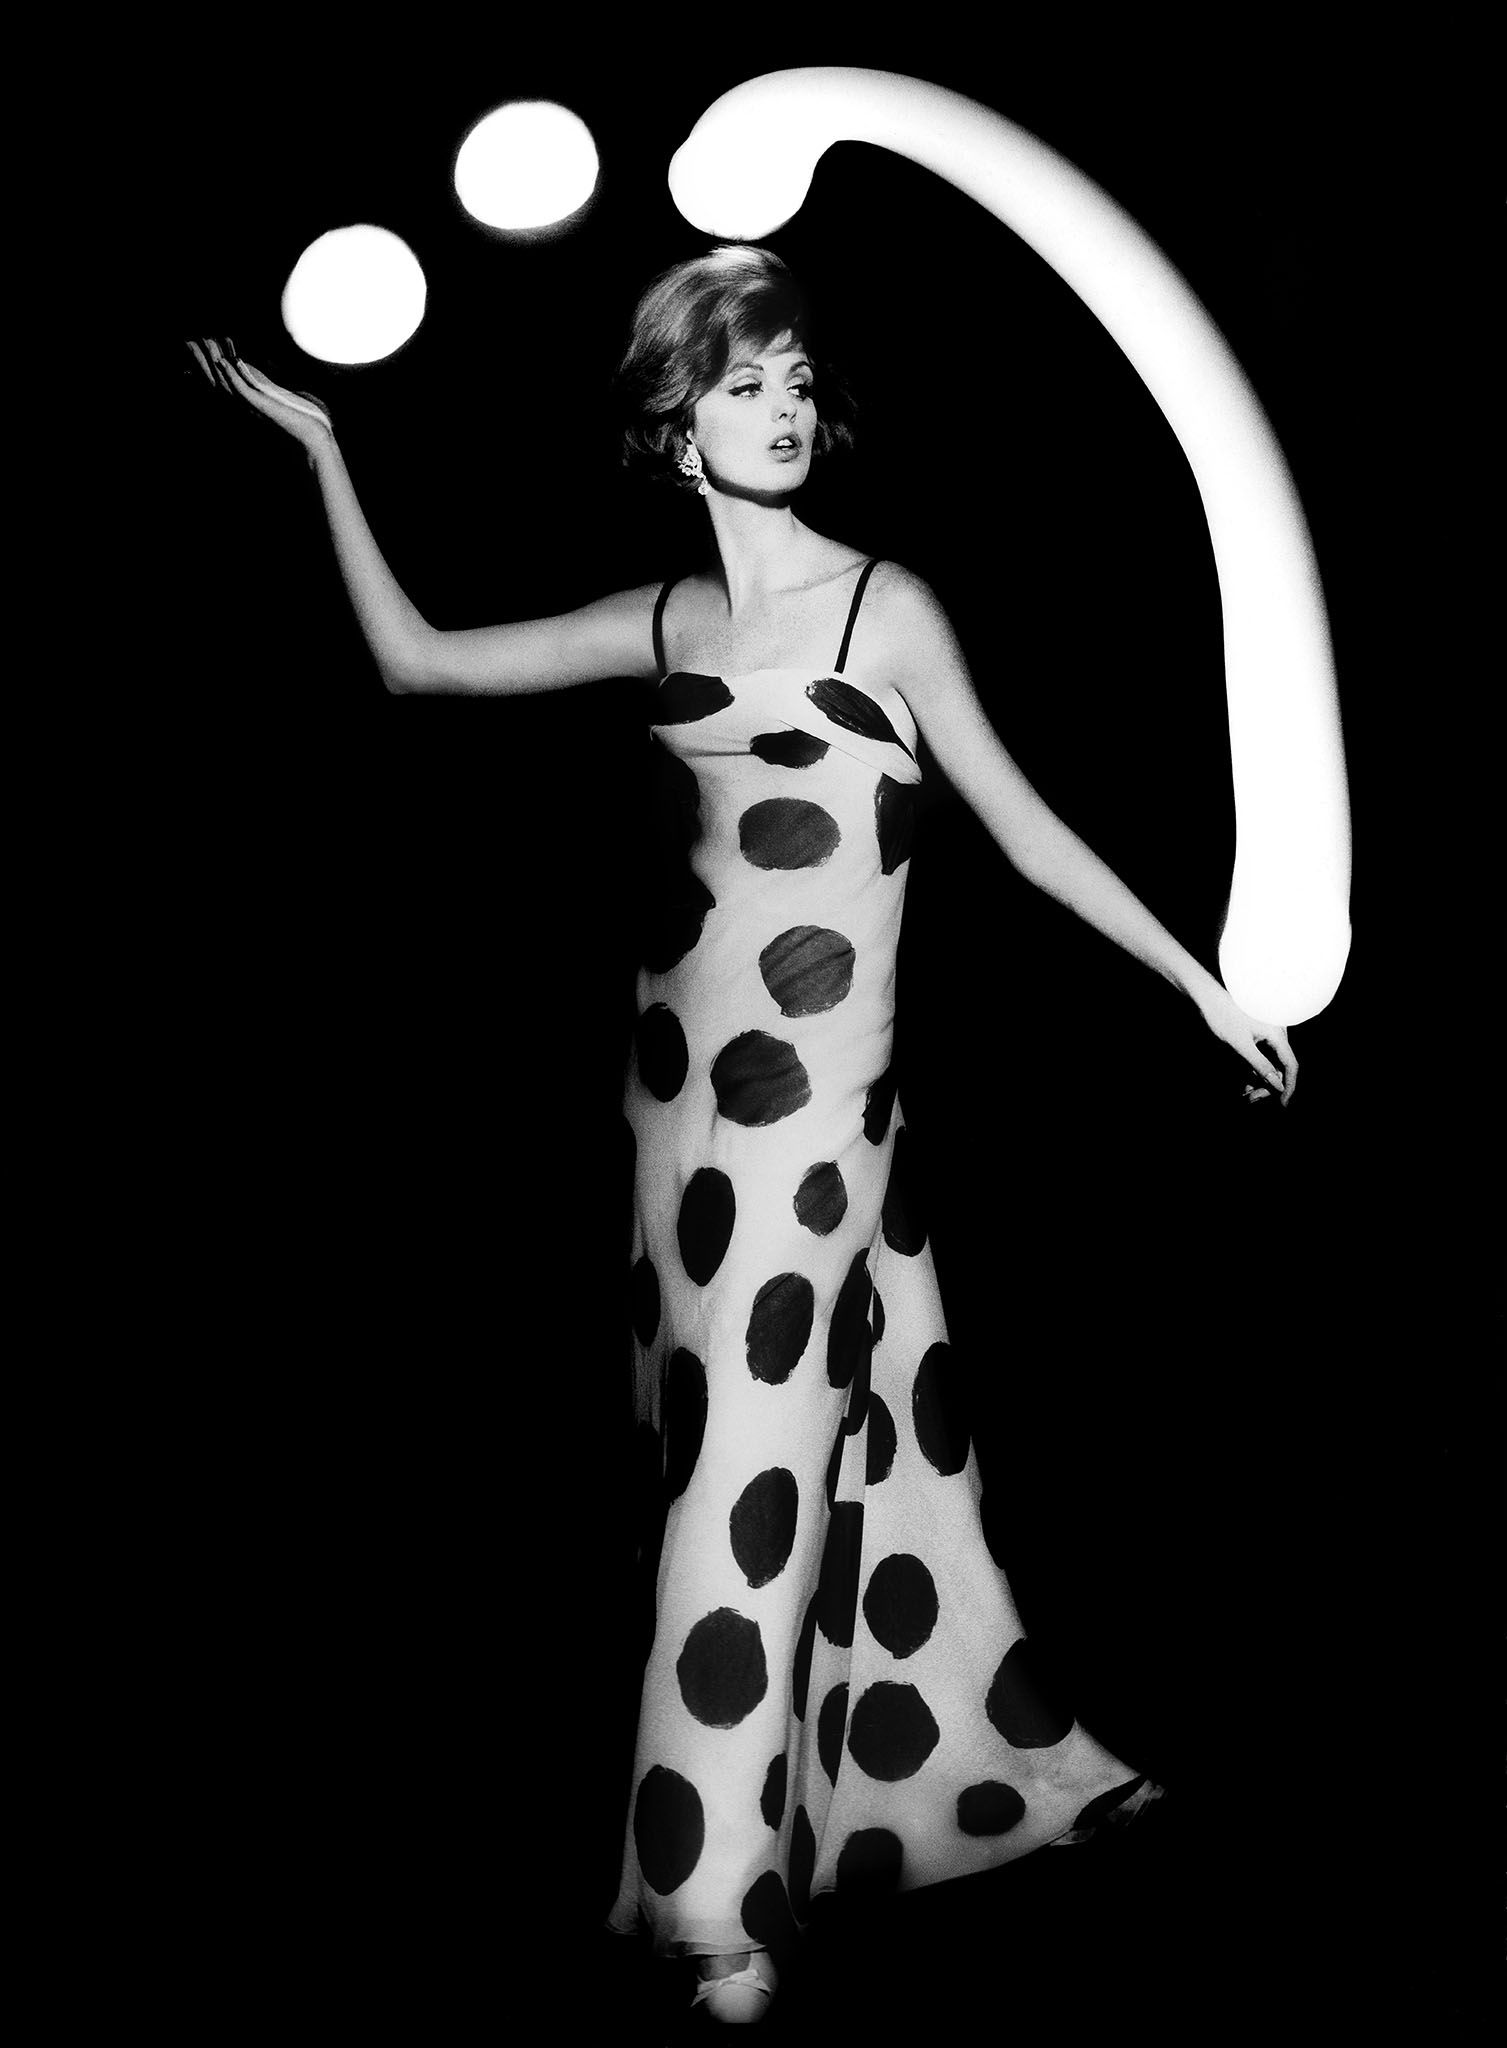 Dorothy-juggling-white-light-balls-Paris-Klein-VLD